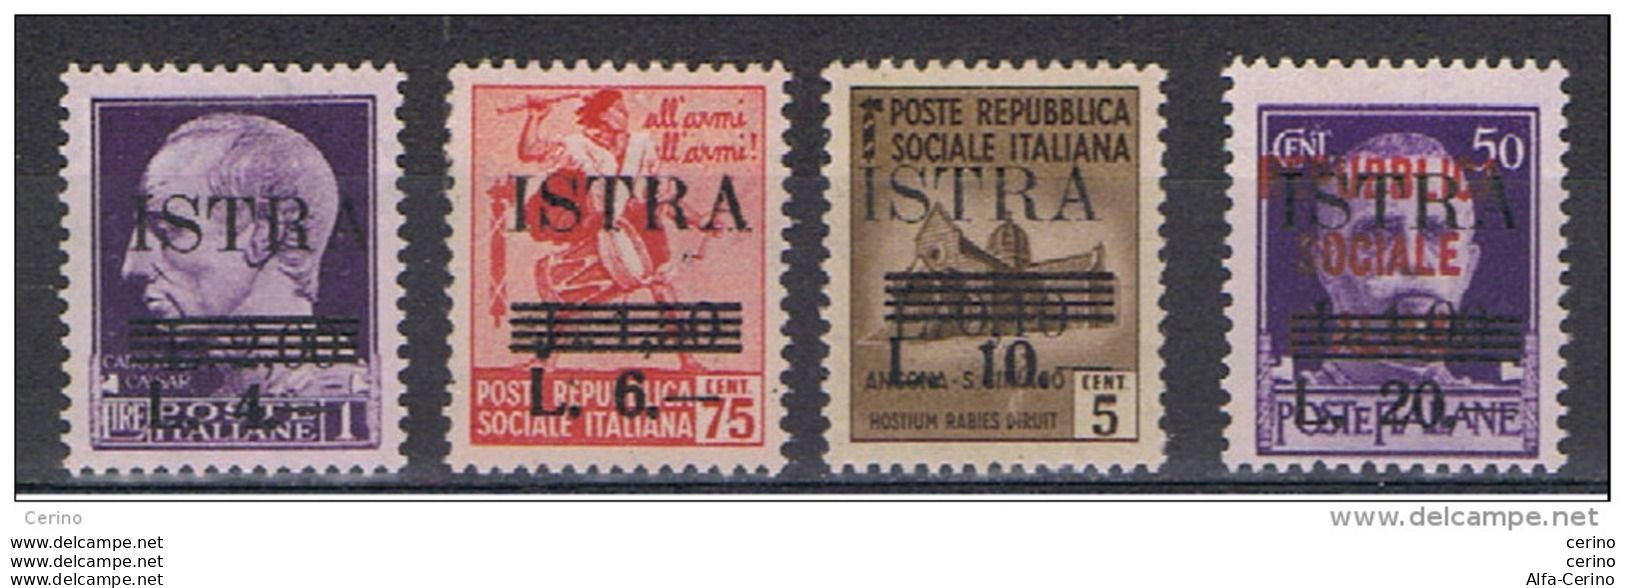 ISTRIA - OCC. JUGOSLAVA:  1945  SOPRSTAMPATI  -  S. CPL. 4  VAL. N. -  SASS. 37/40 - Ocu. Yugoslava: Istria